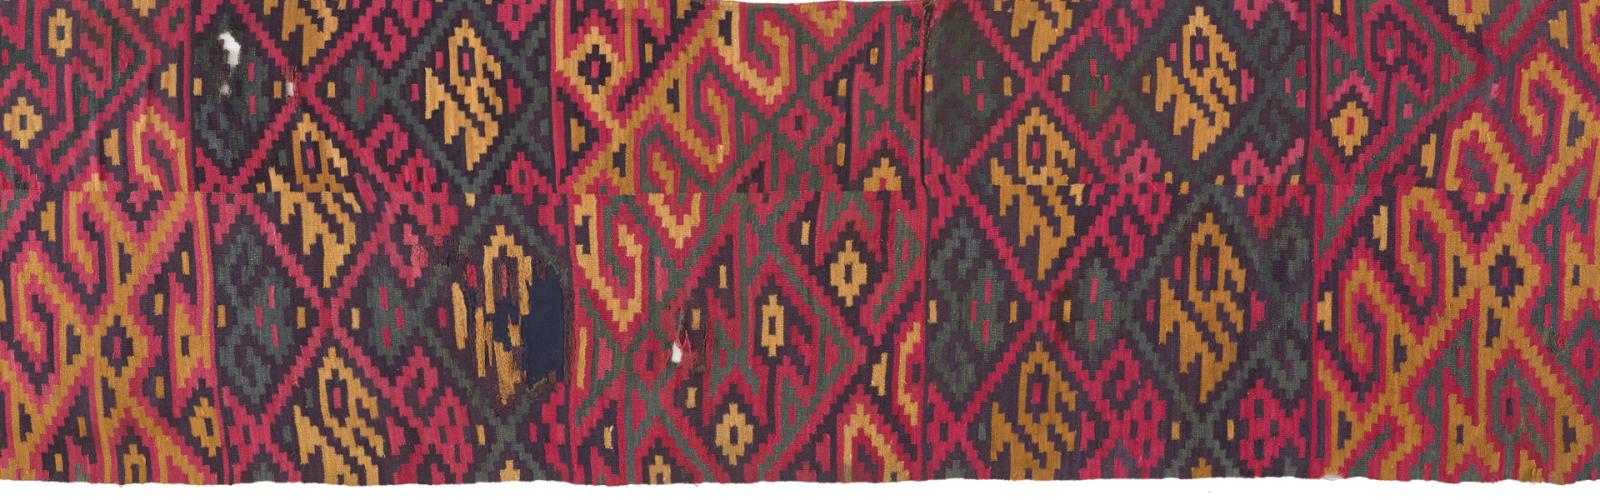 Indigenous American Textiles | The George Washington University Museum ...